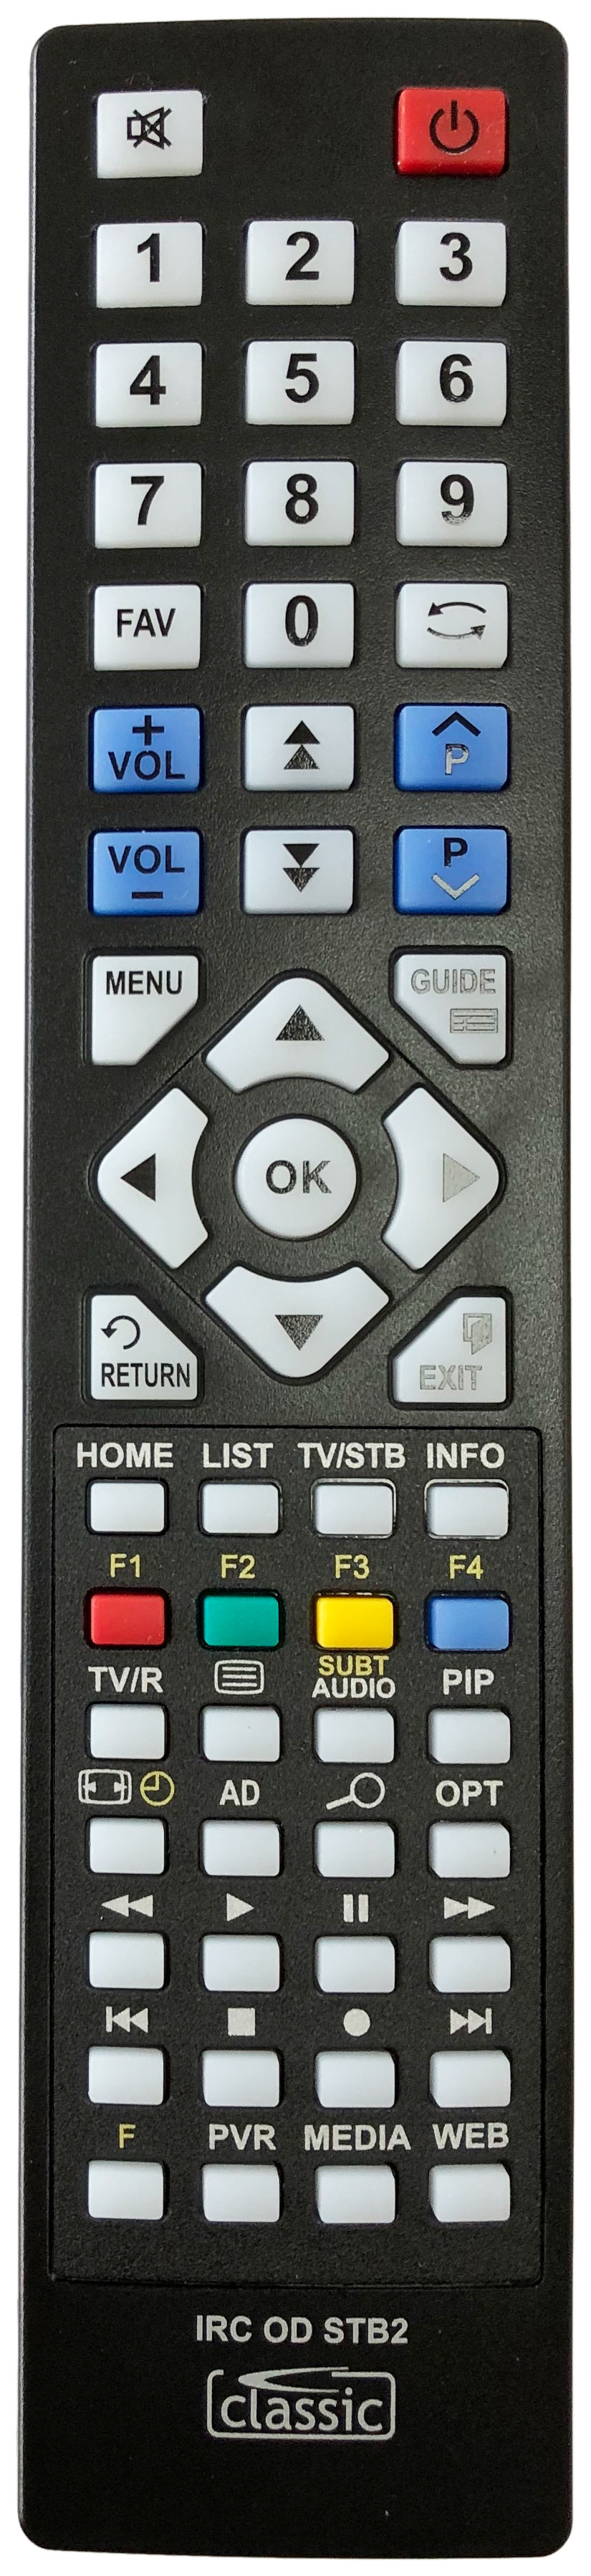 HUMAX RM-108 Remote Control Alternative